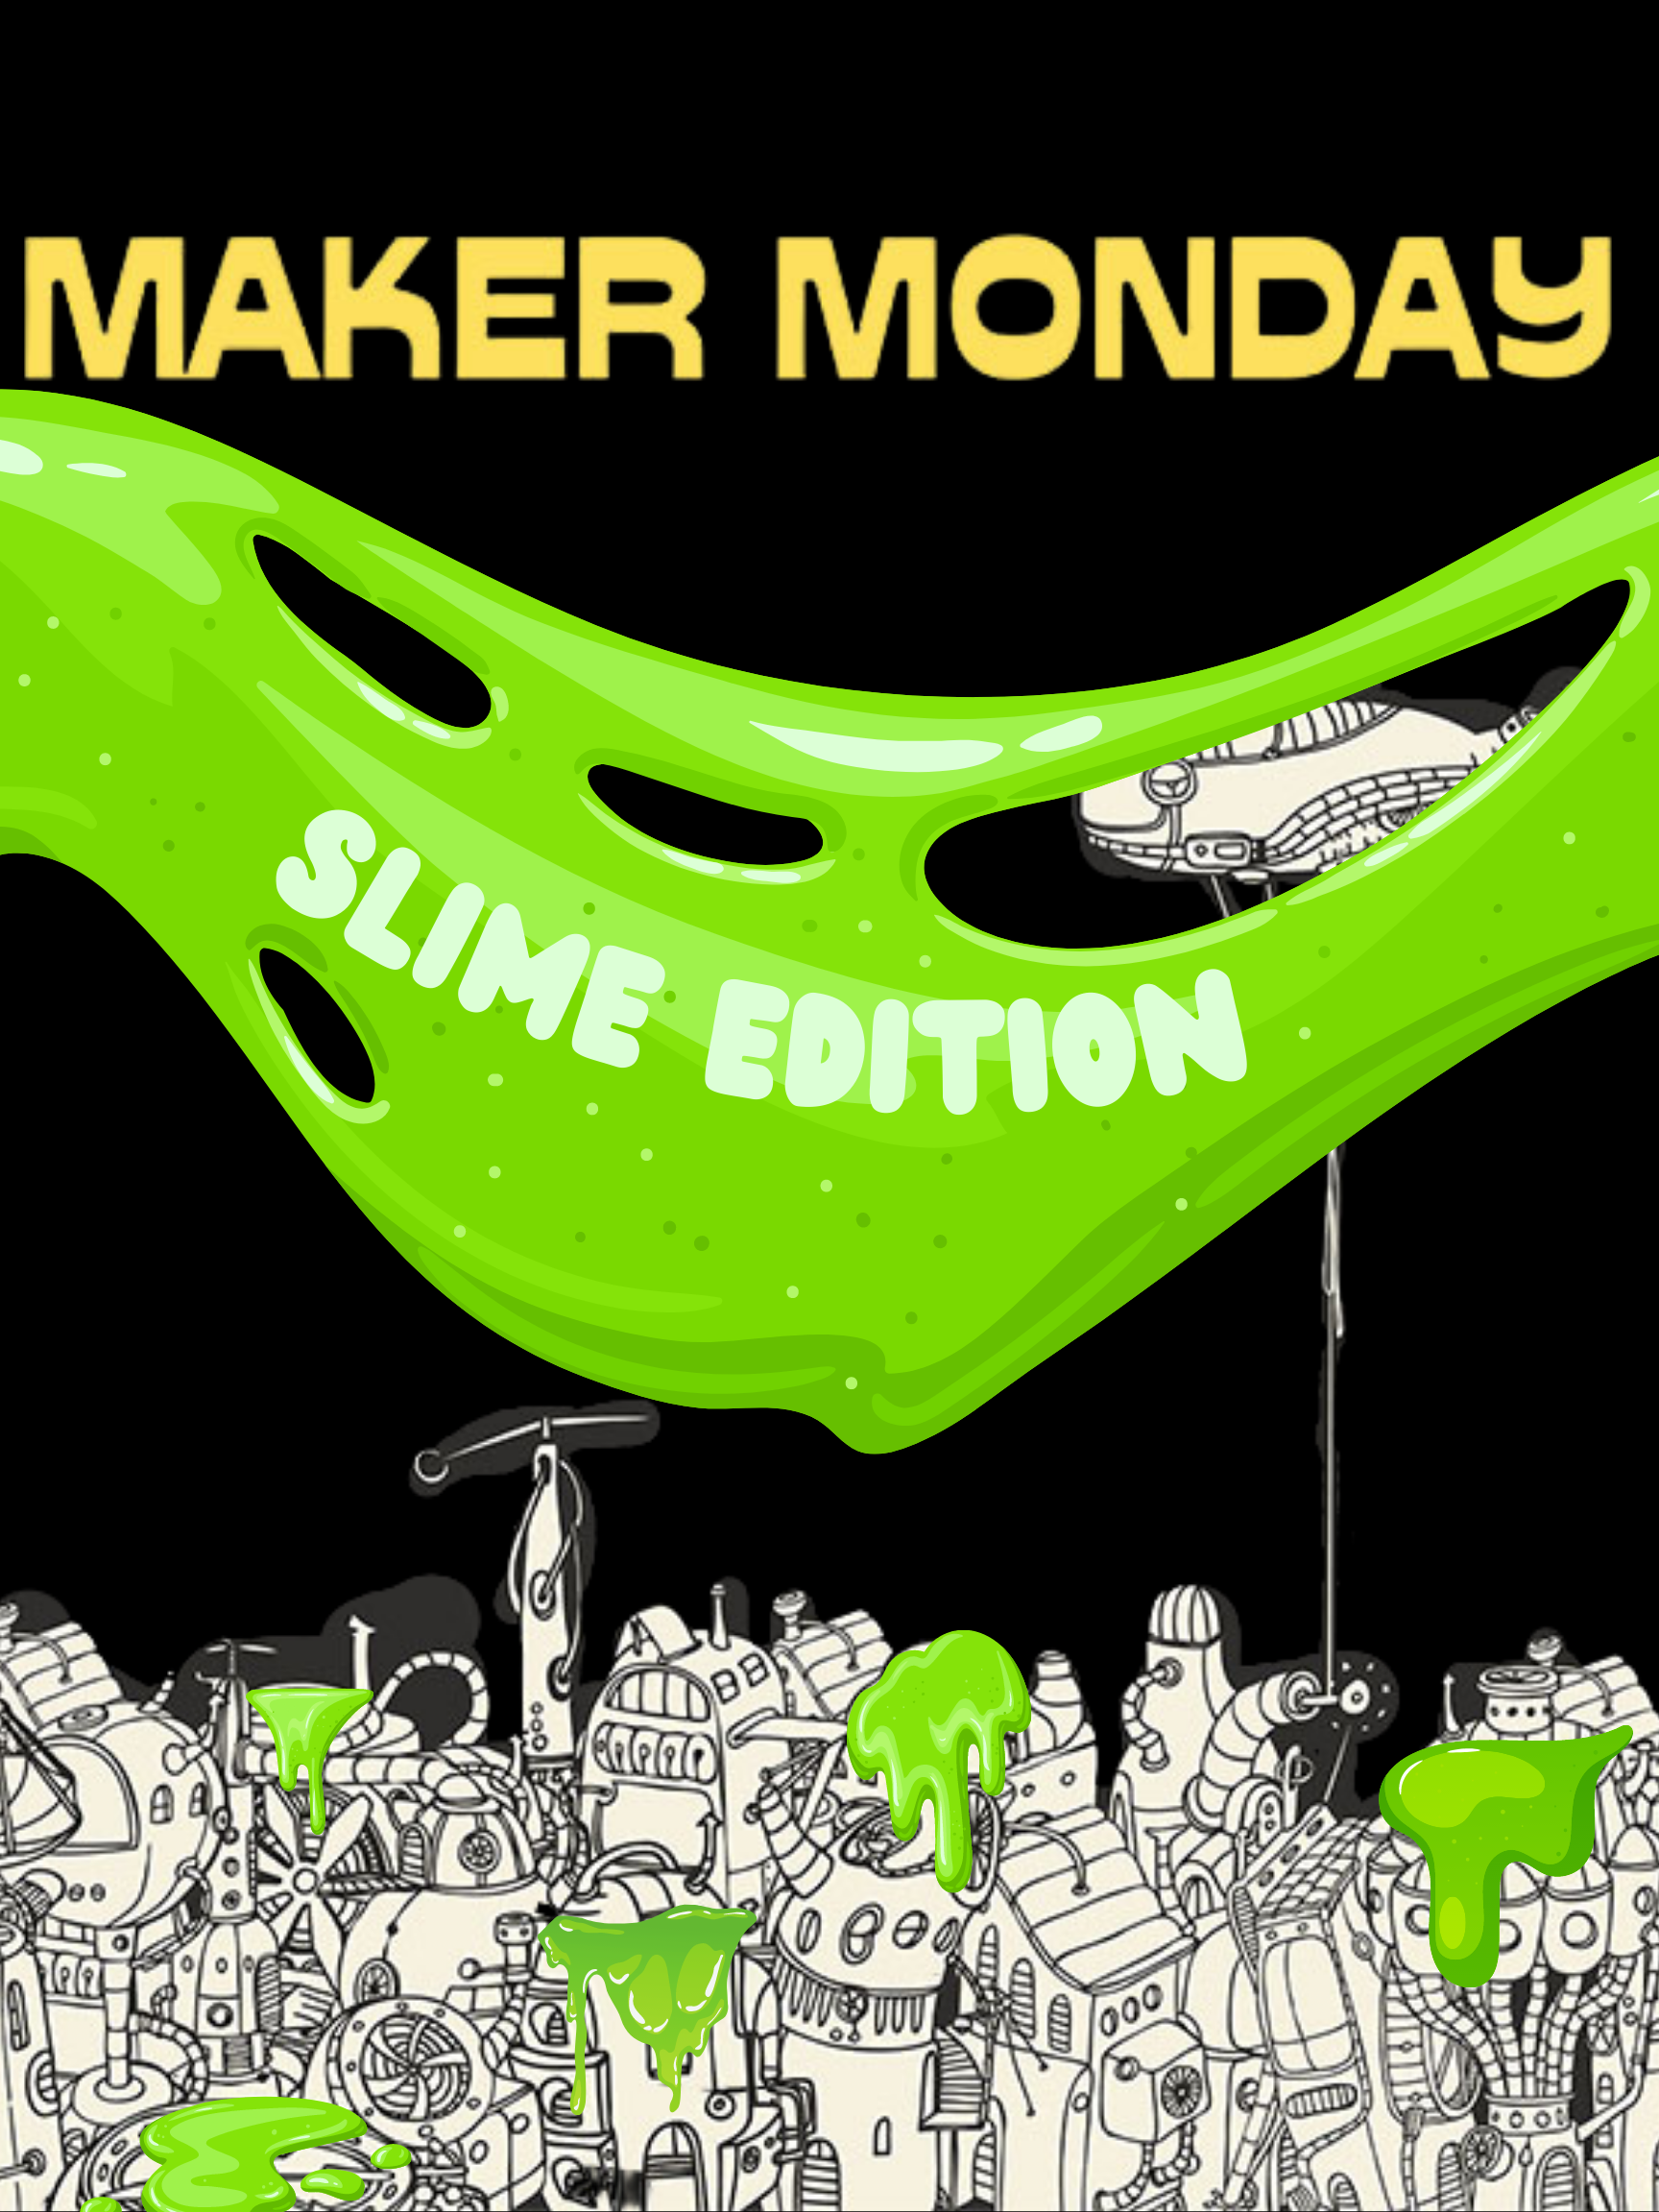 Maker Monday Slime Edition